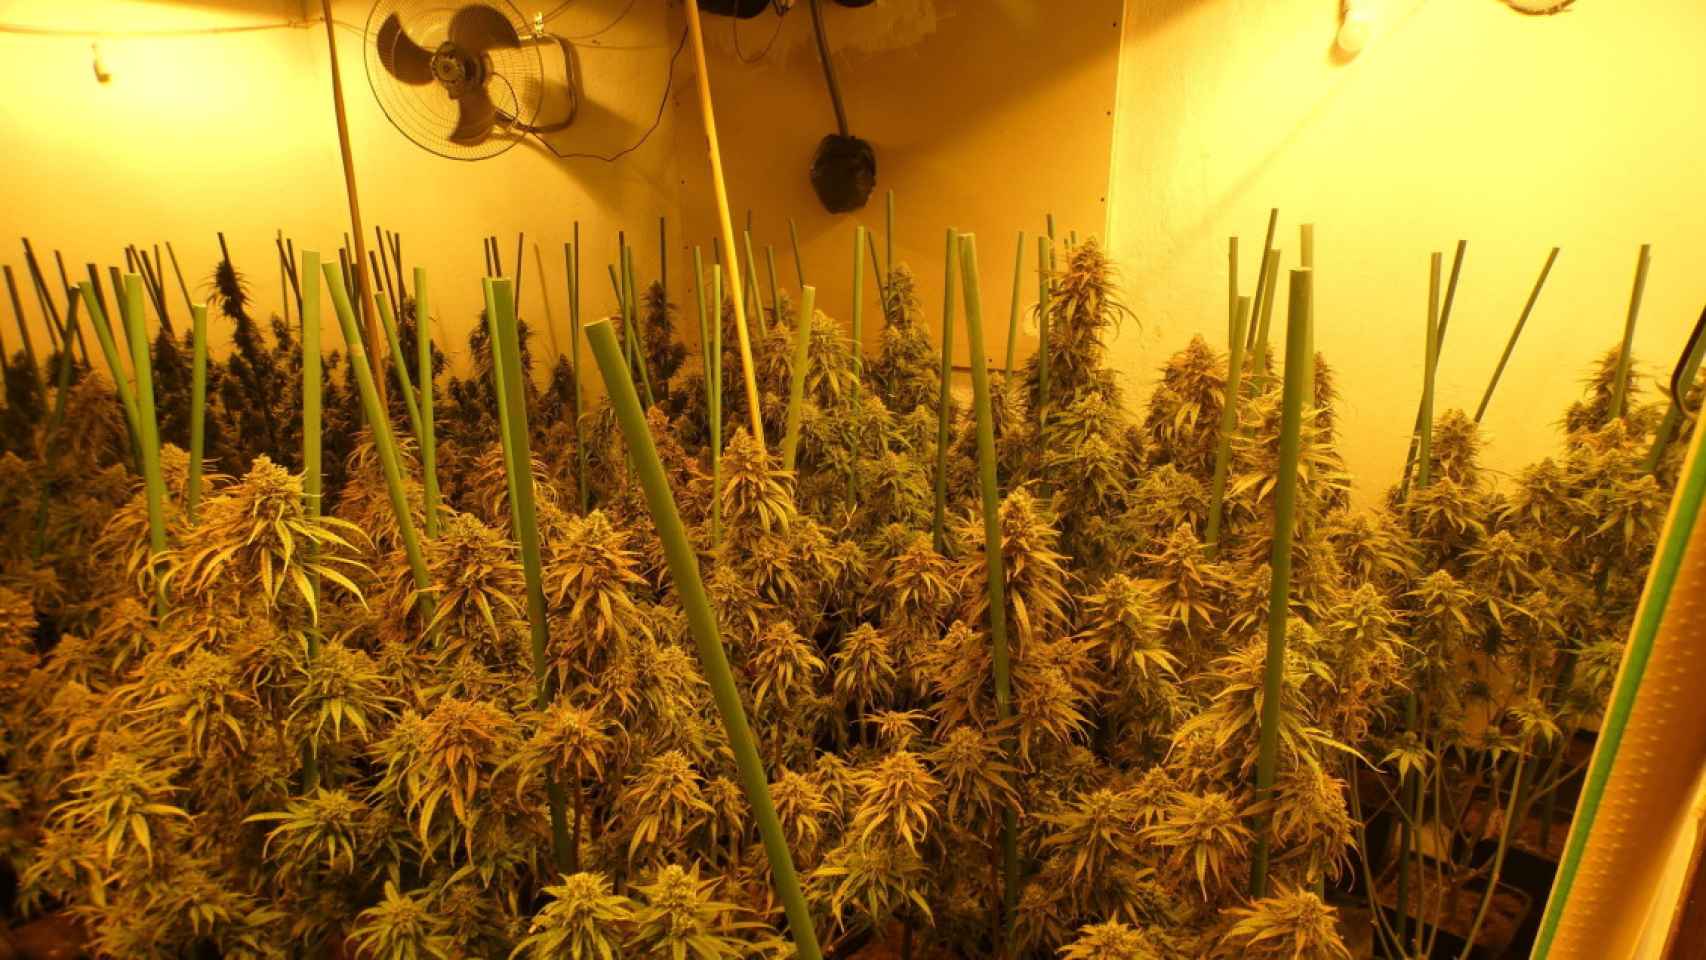 Plantación de marihuana desmantelada por los Mossos / MOSSOS D'ESQUADRA